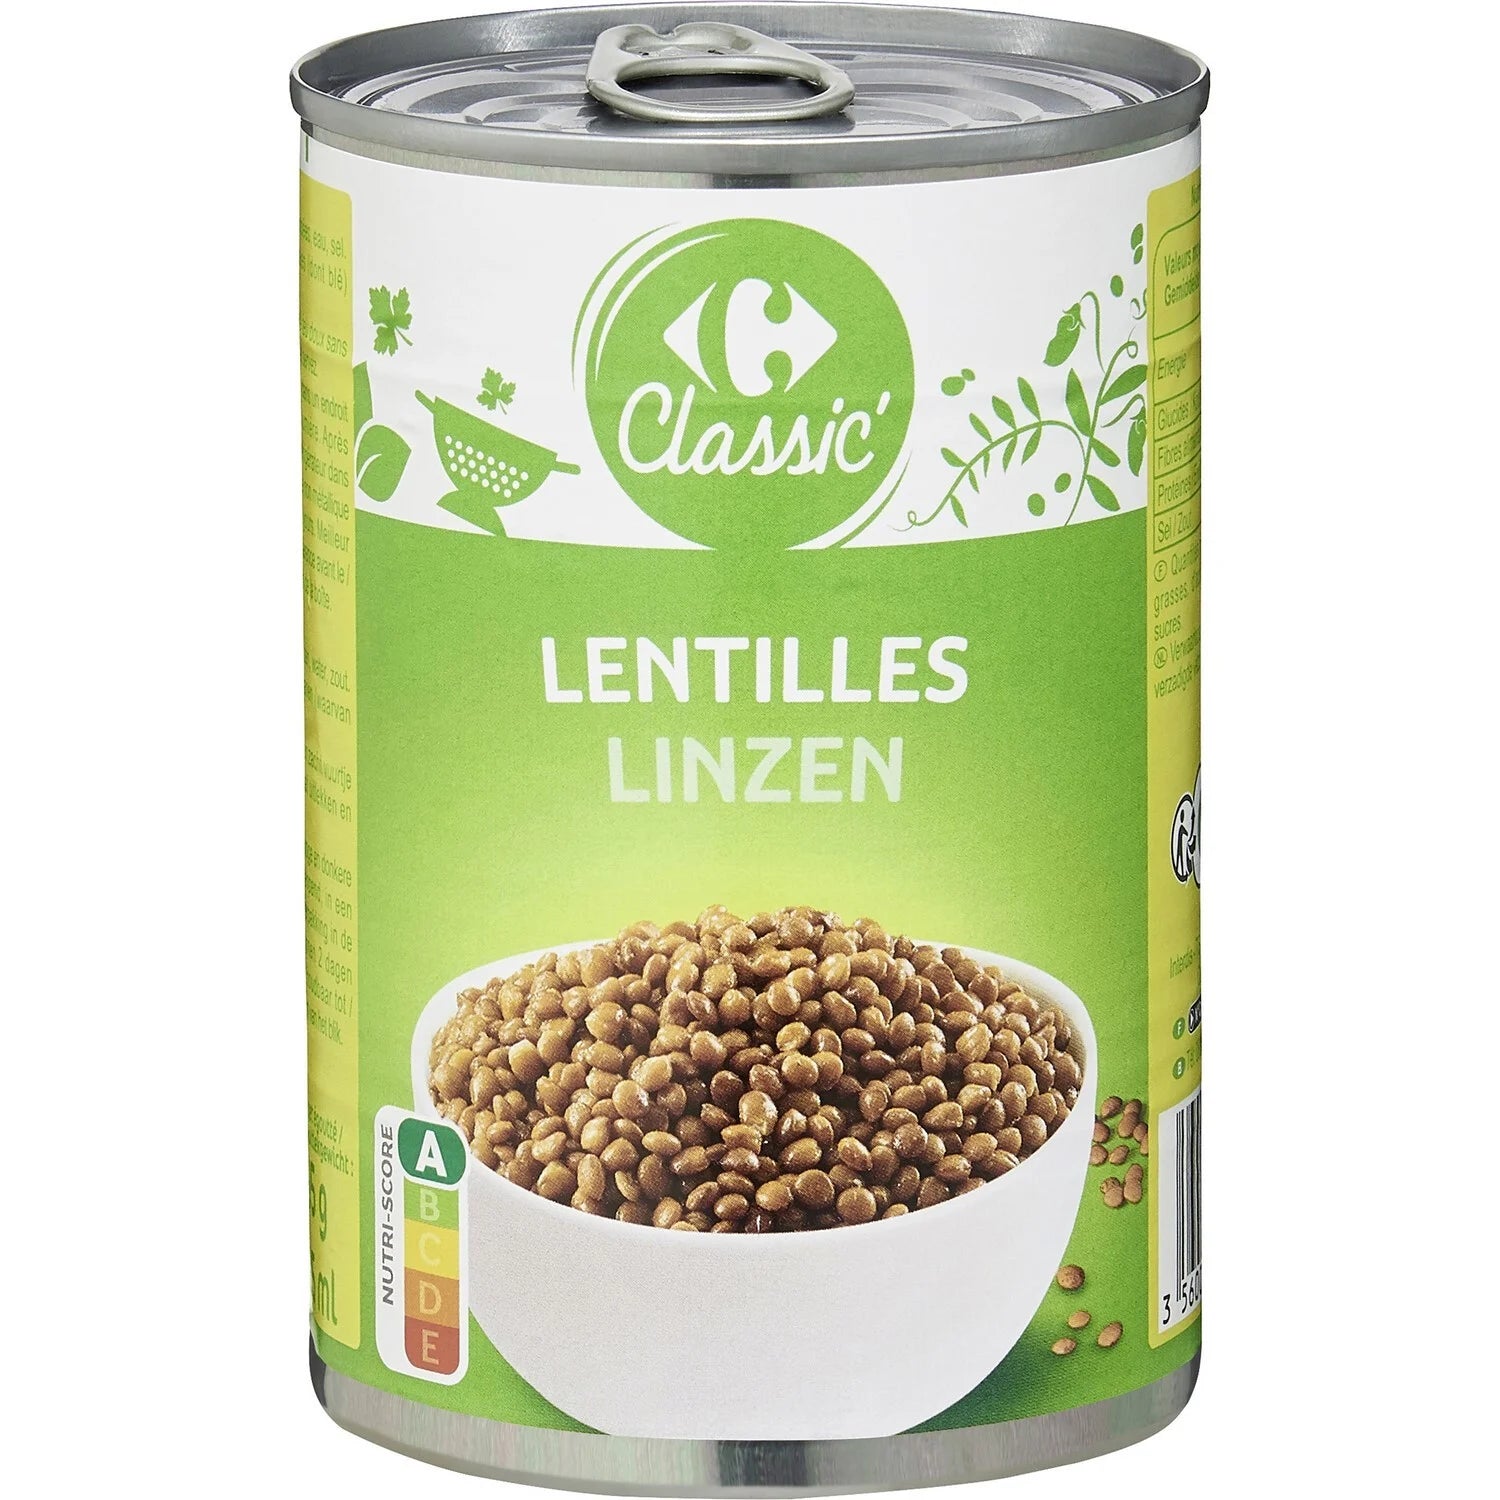 1/2 Lentilles - ARSHPRIX